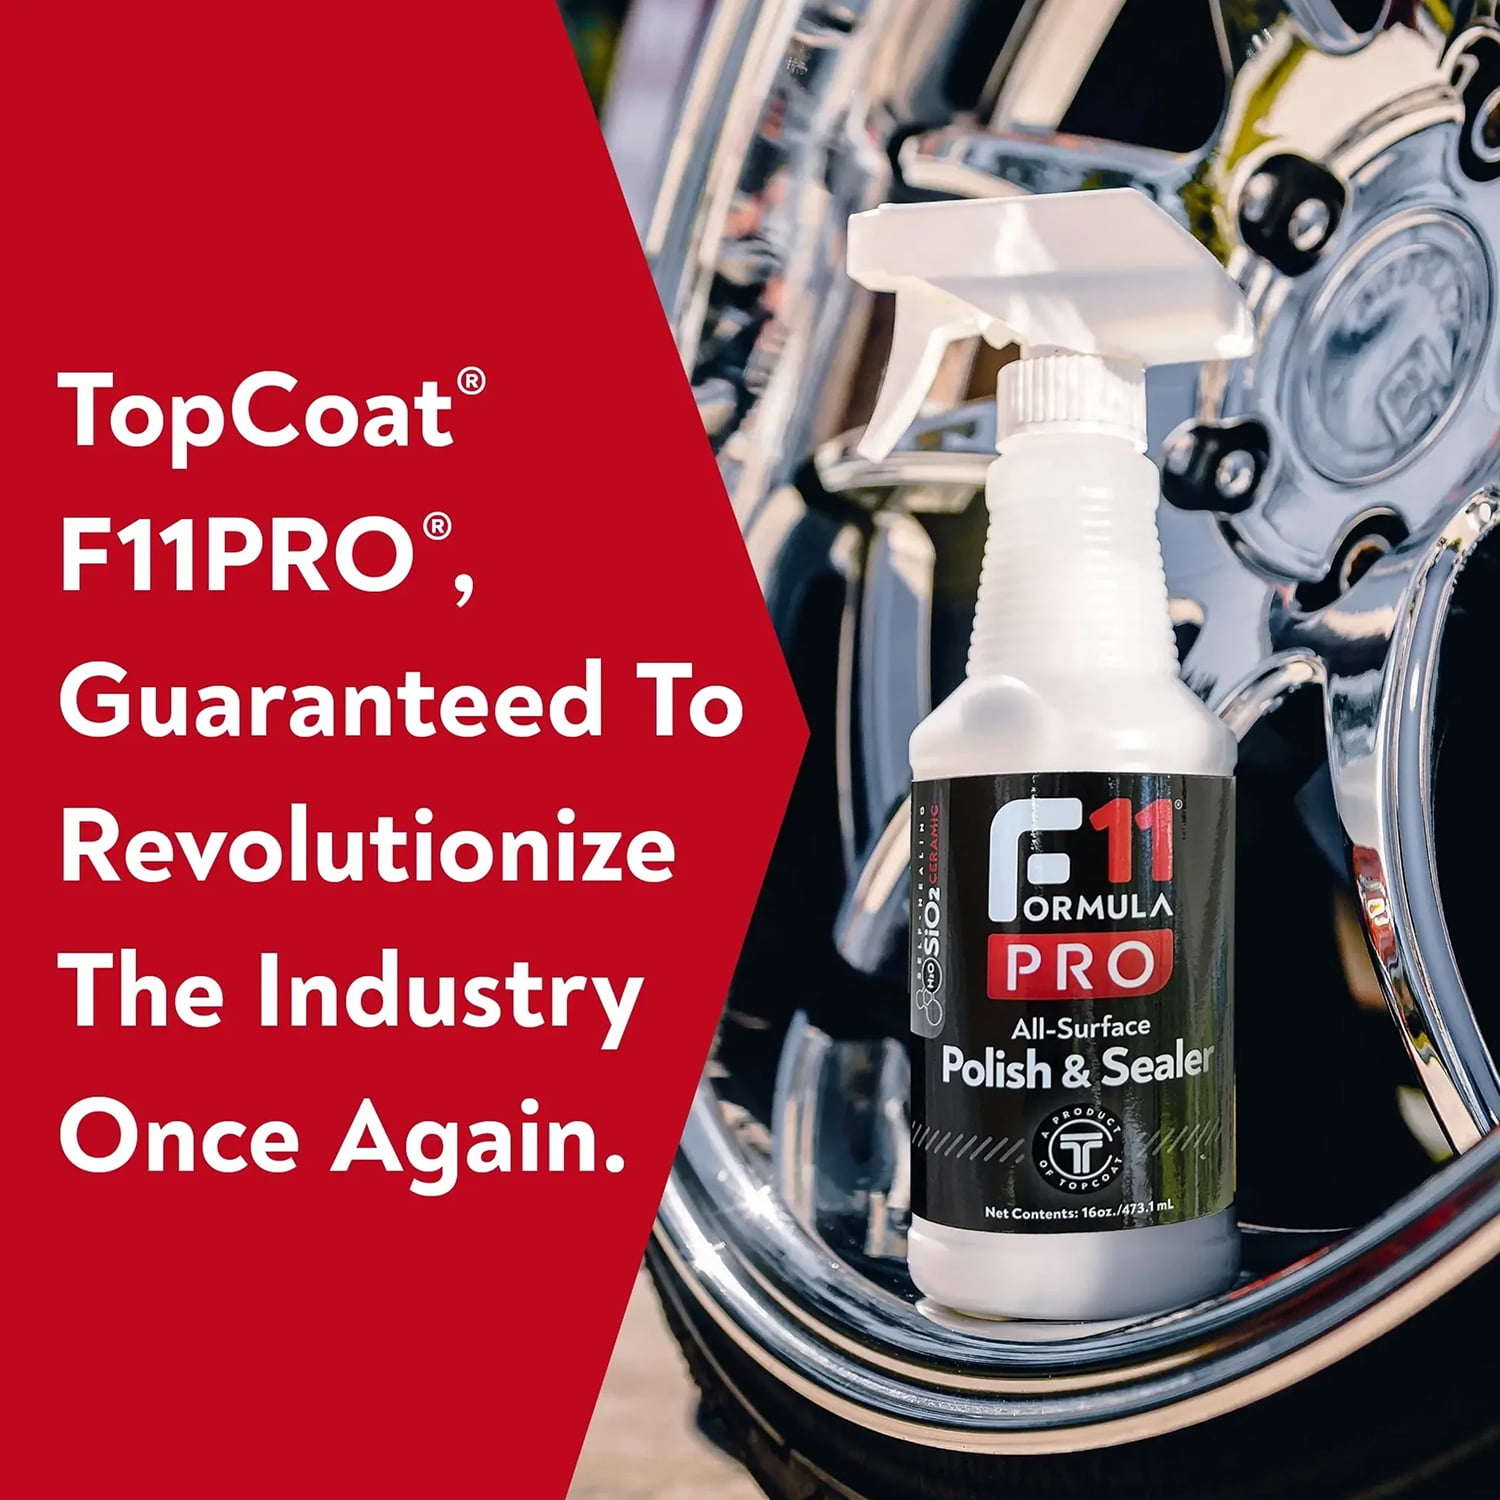 TopCoat F11PRO 8oz Spray - All-Surface Polish & Sealer - F11 Pro Formula -  Water-Based - Multi-Purpose Wax+